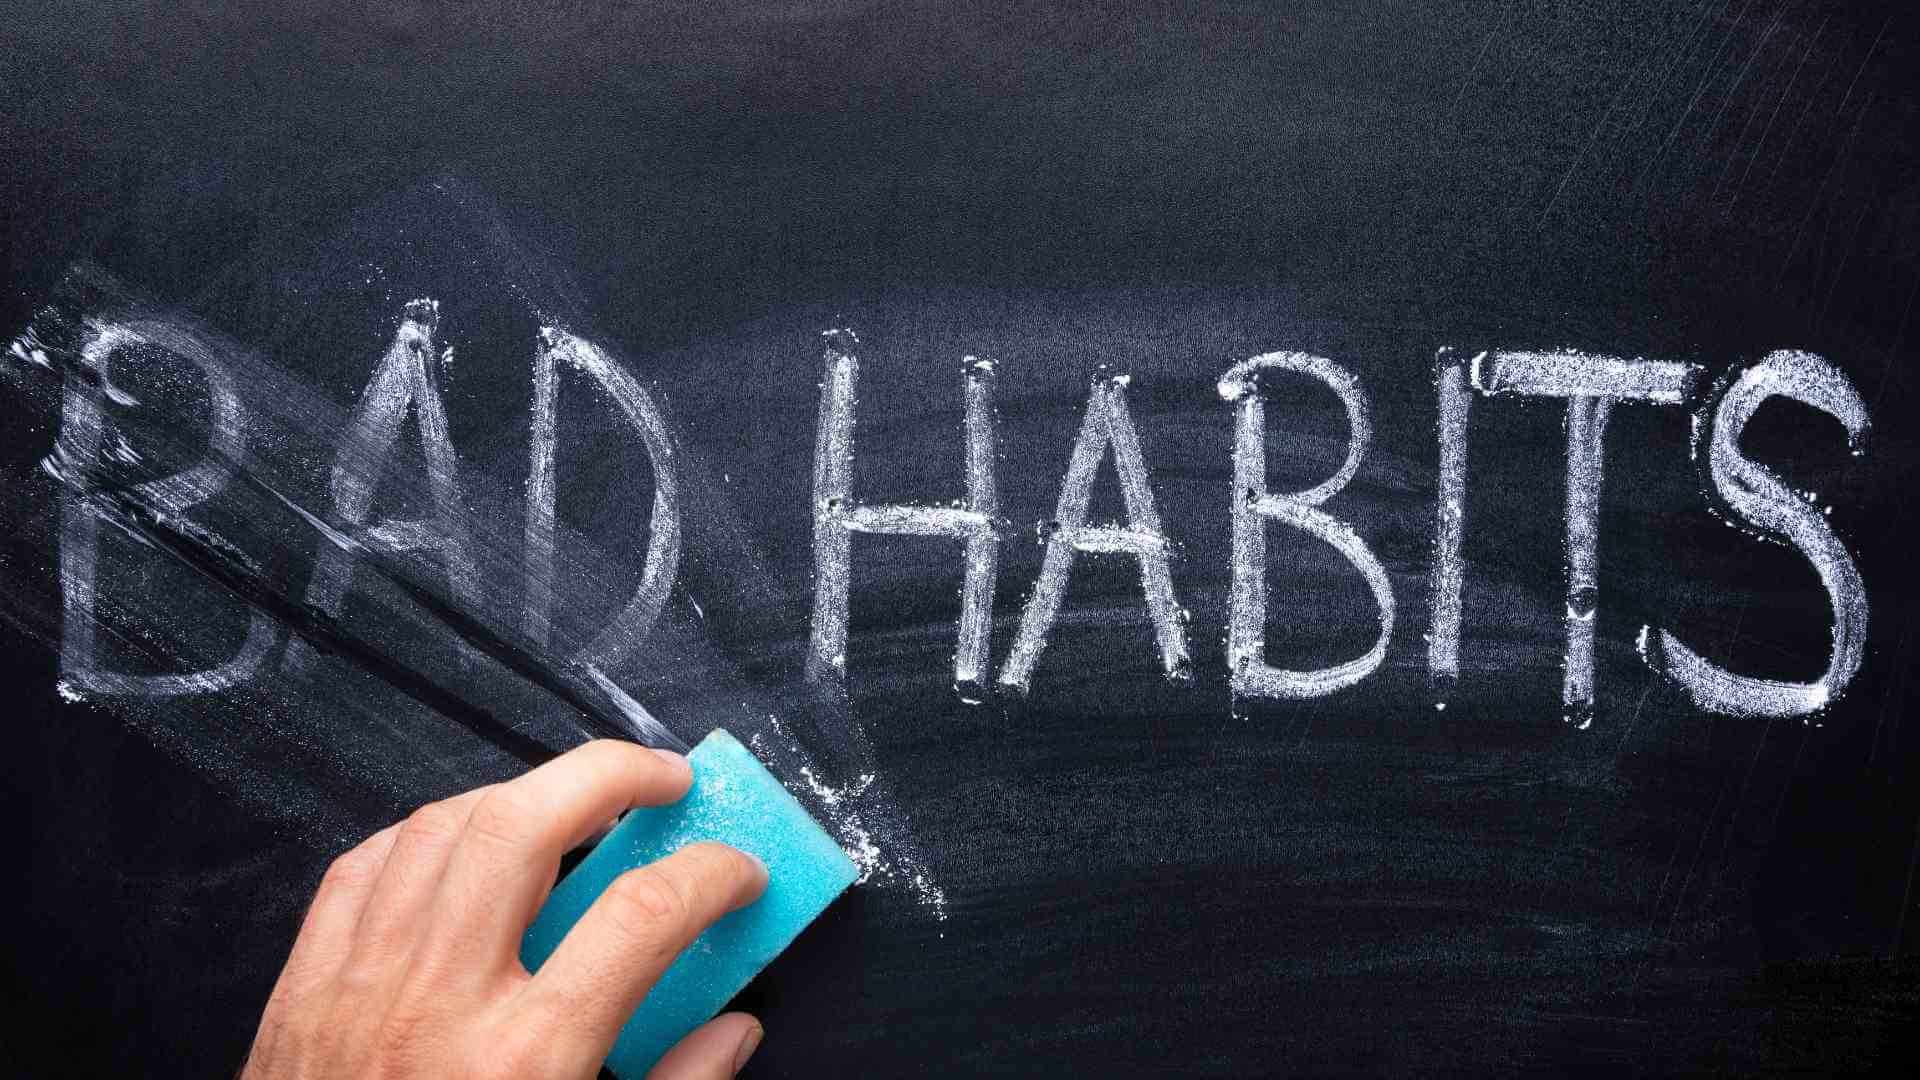 The word "bad habits" on a blackboard getting erased.